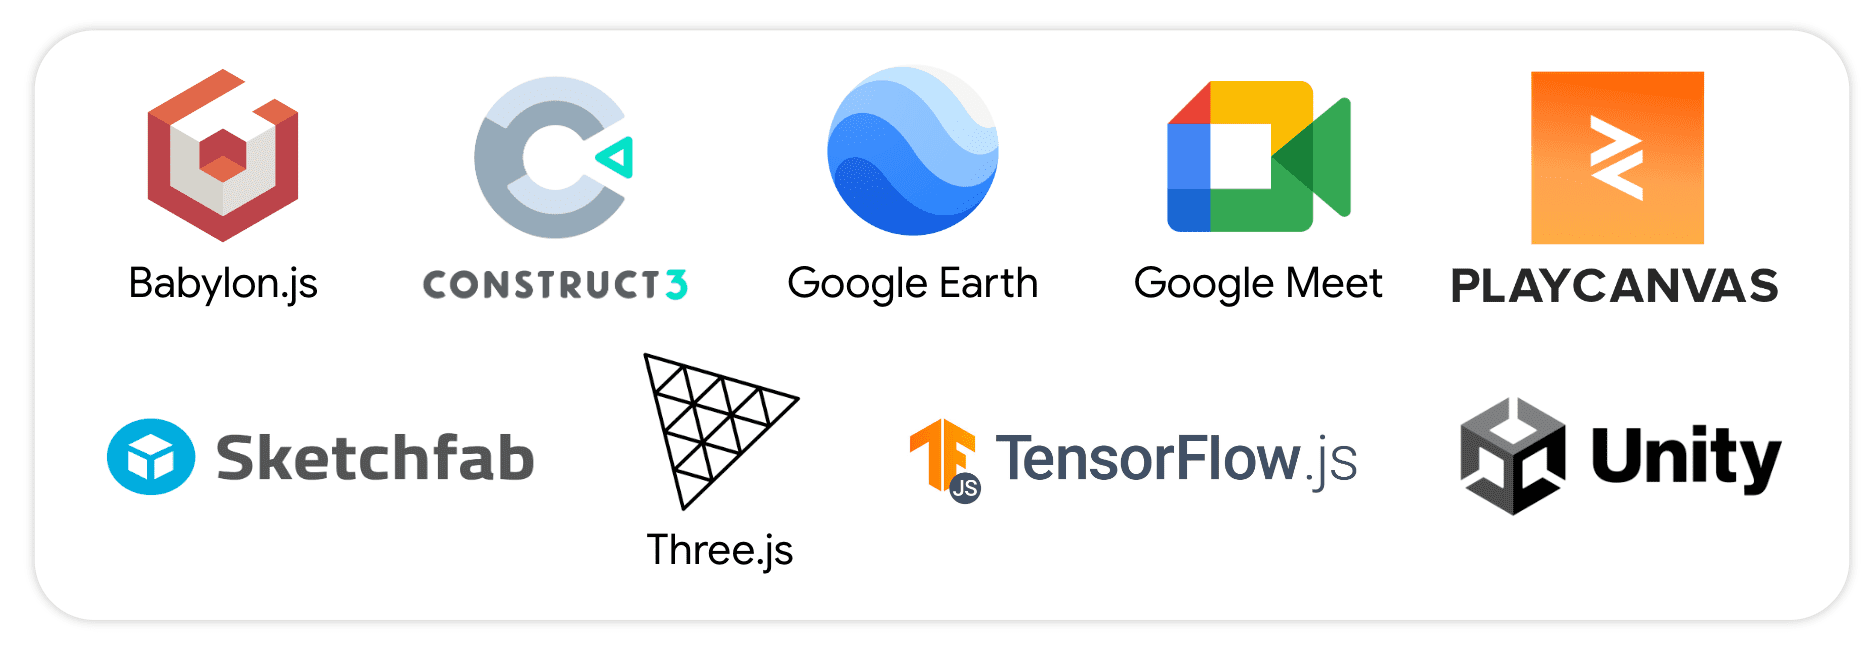 Babylon.js, Construct 3, Google Earth, Google Meet, PlayCanvas, Sketchfab, Three.JS, TensorFlow.js, dan Unity.